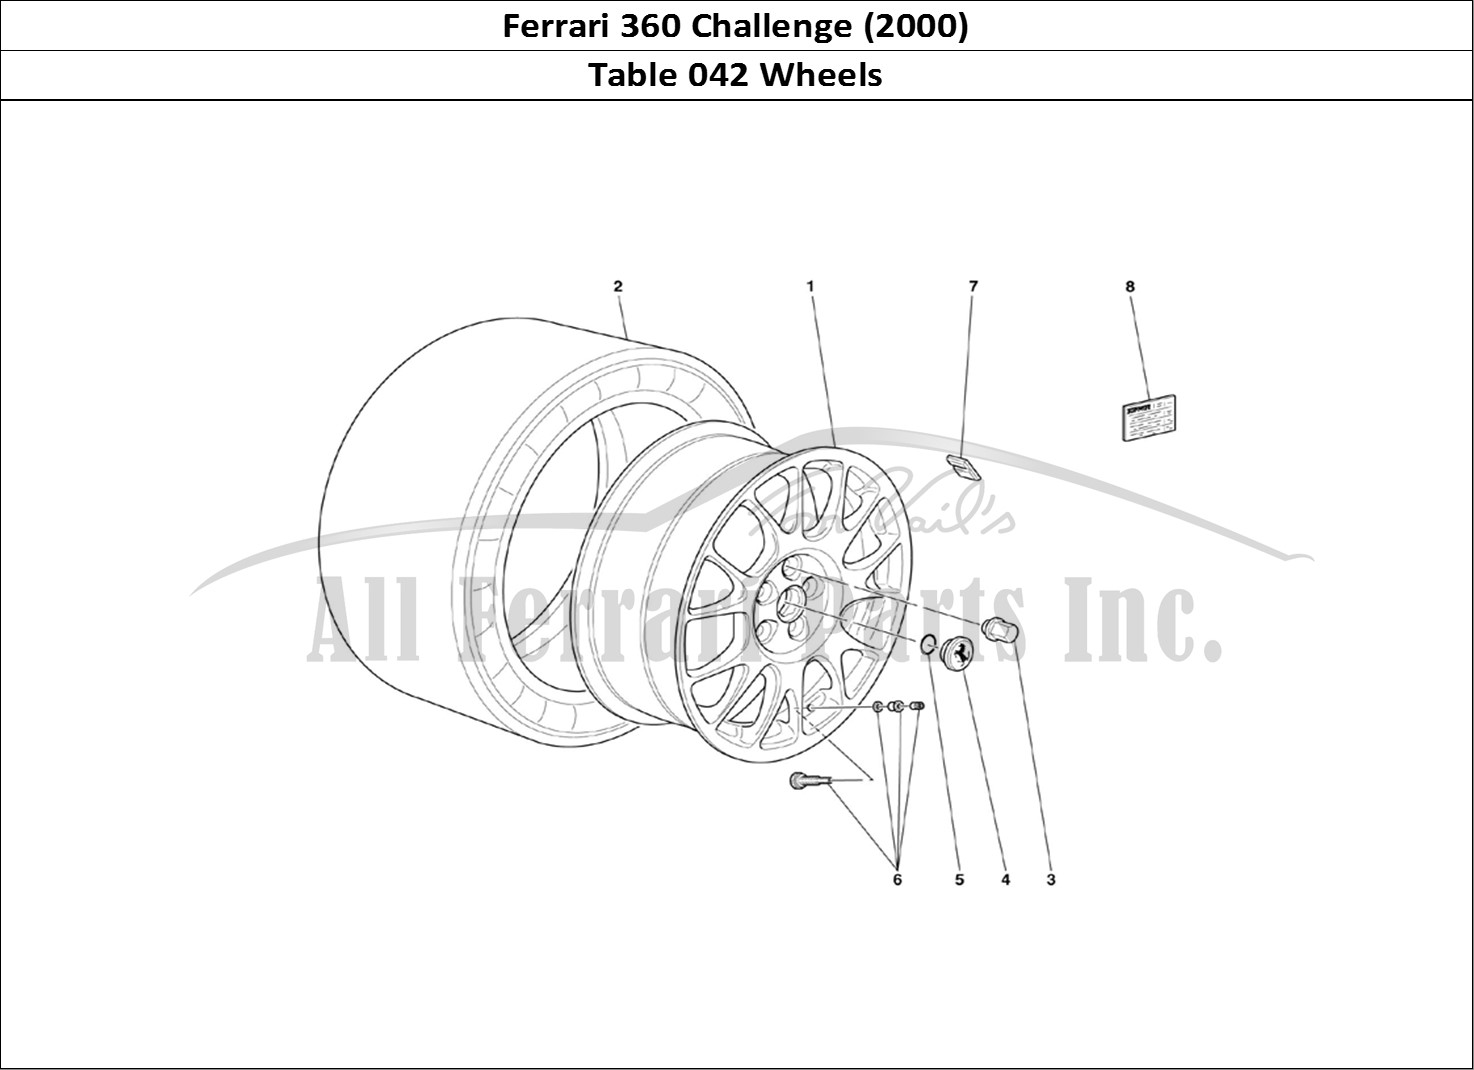 Ferrari Parts Ferrari 360 Challenge (2000) Page 042 Wheels